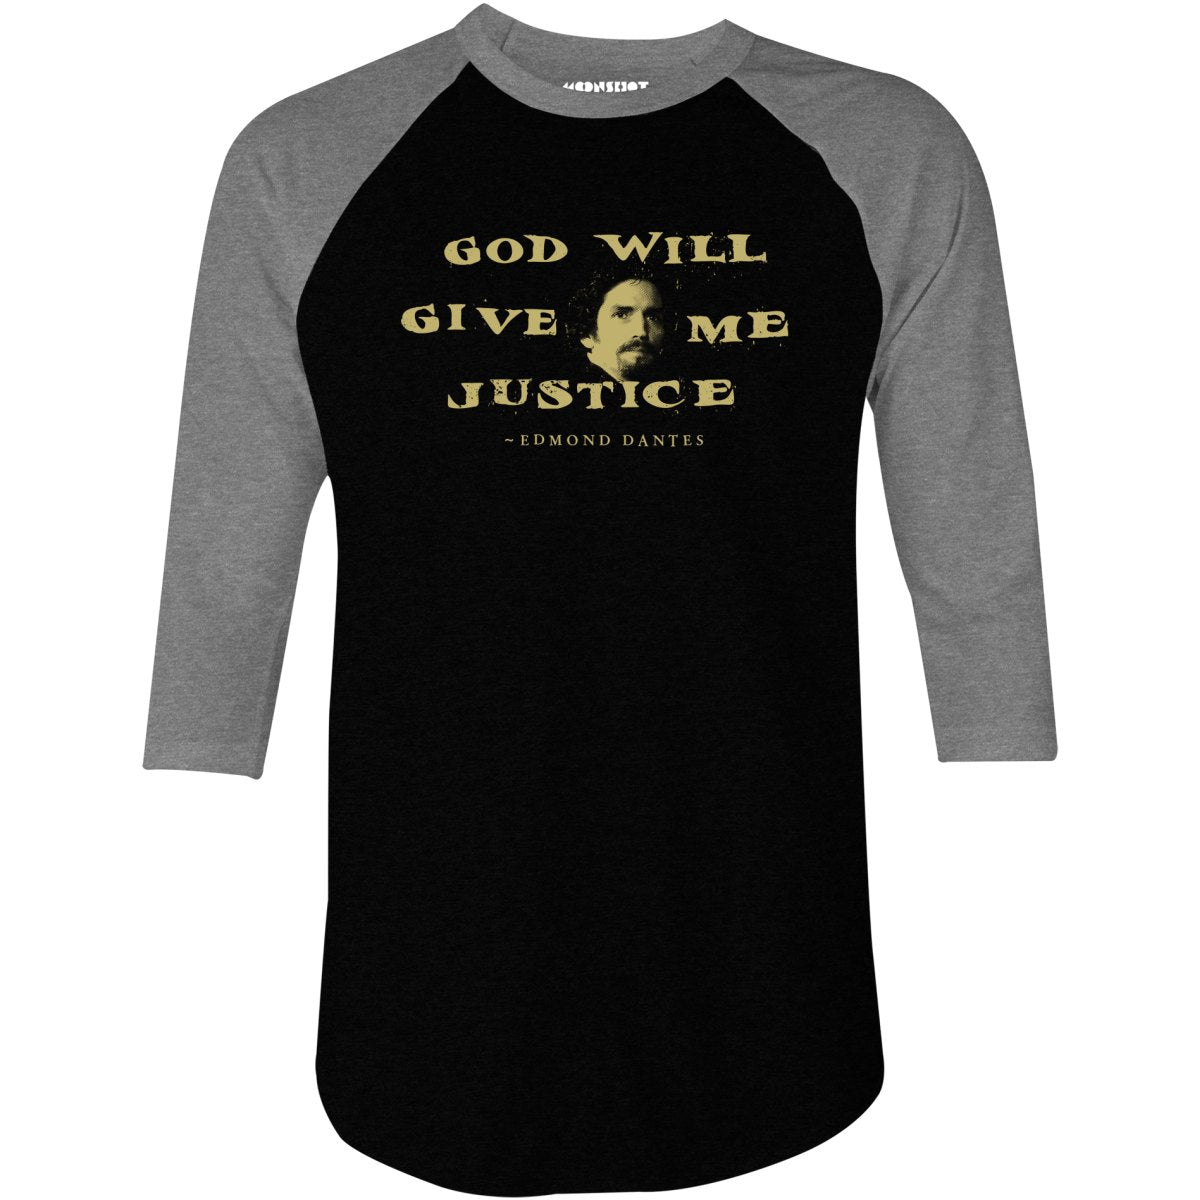 Edmond Dantes - God Will Give Me Justice - 3/4 Sleeve Raglan T-Shirt